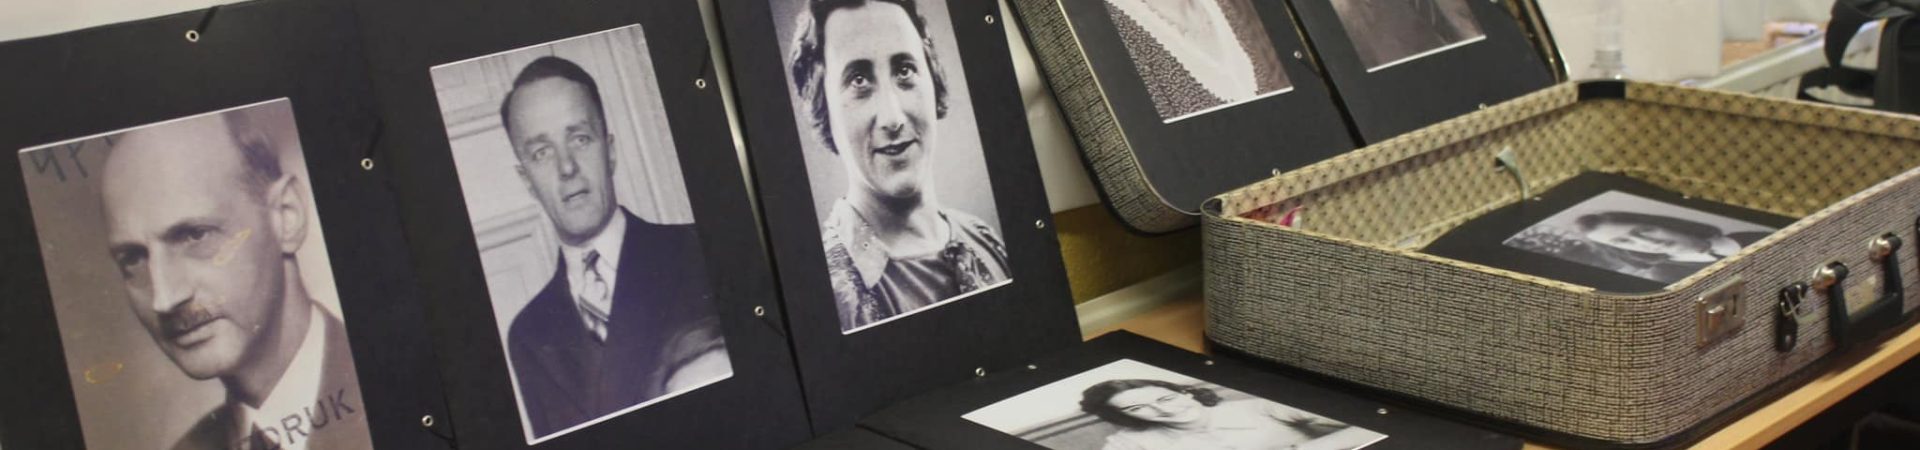 Inauguration de l’exposition Anne Frank